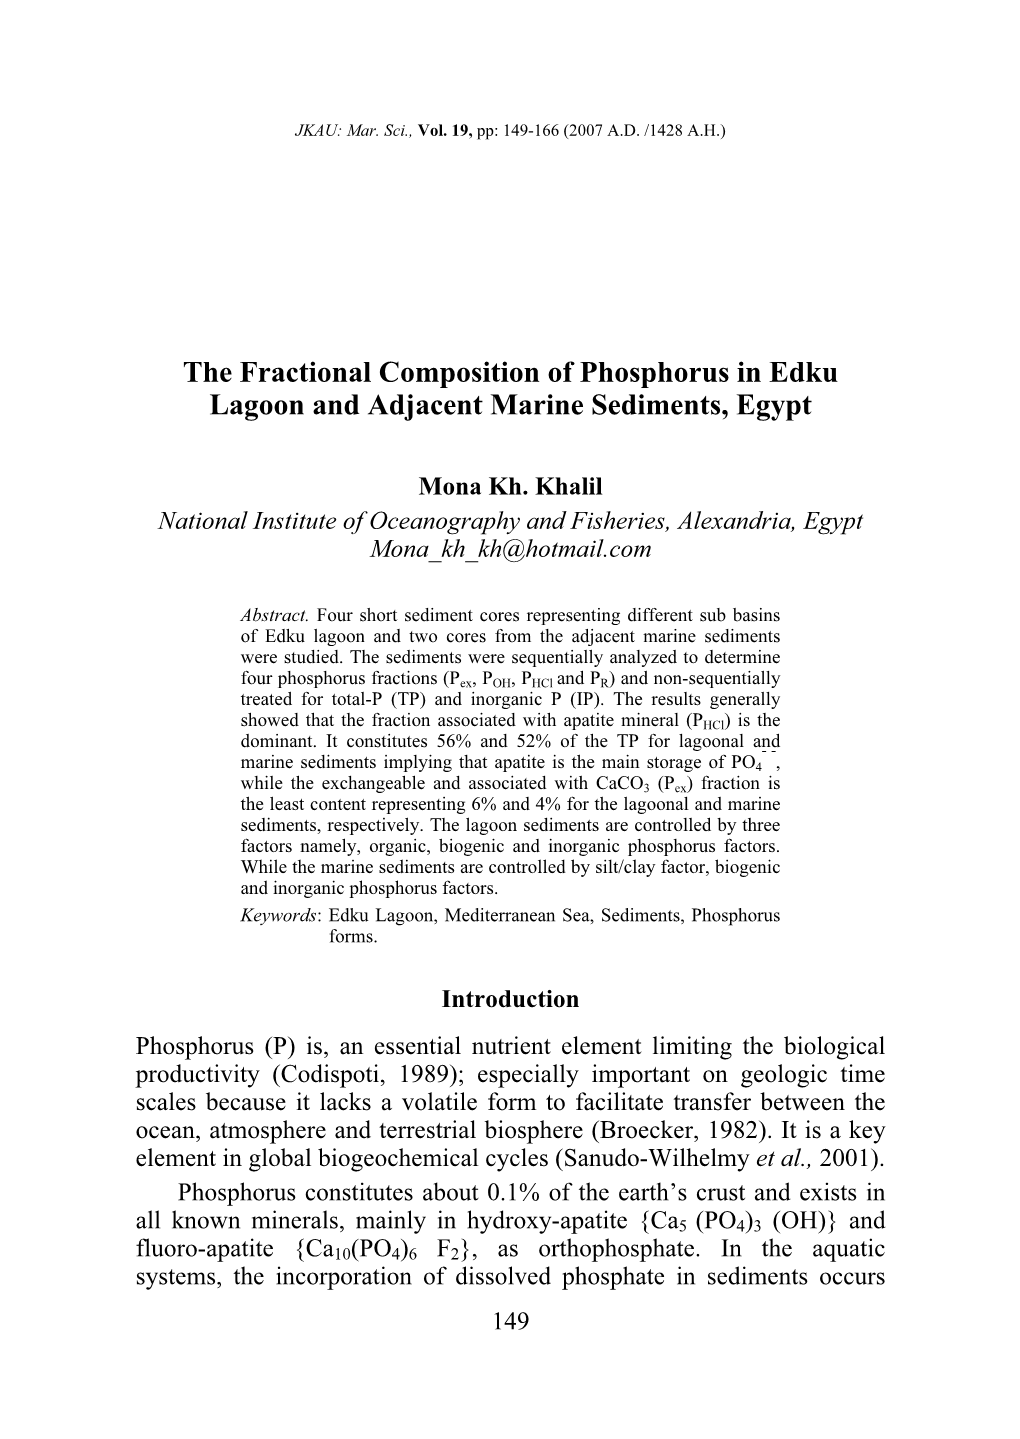 The Fractional Composition of Phosphorus in Edku Lagoon and Adjacent Marine Sediments, Egypt